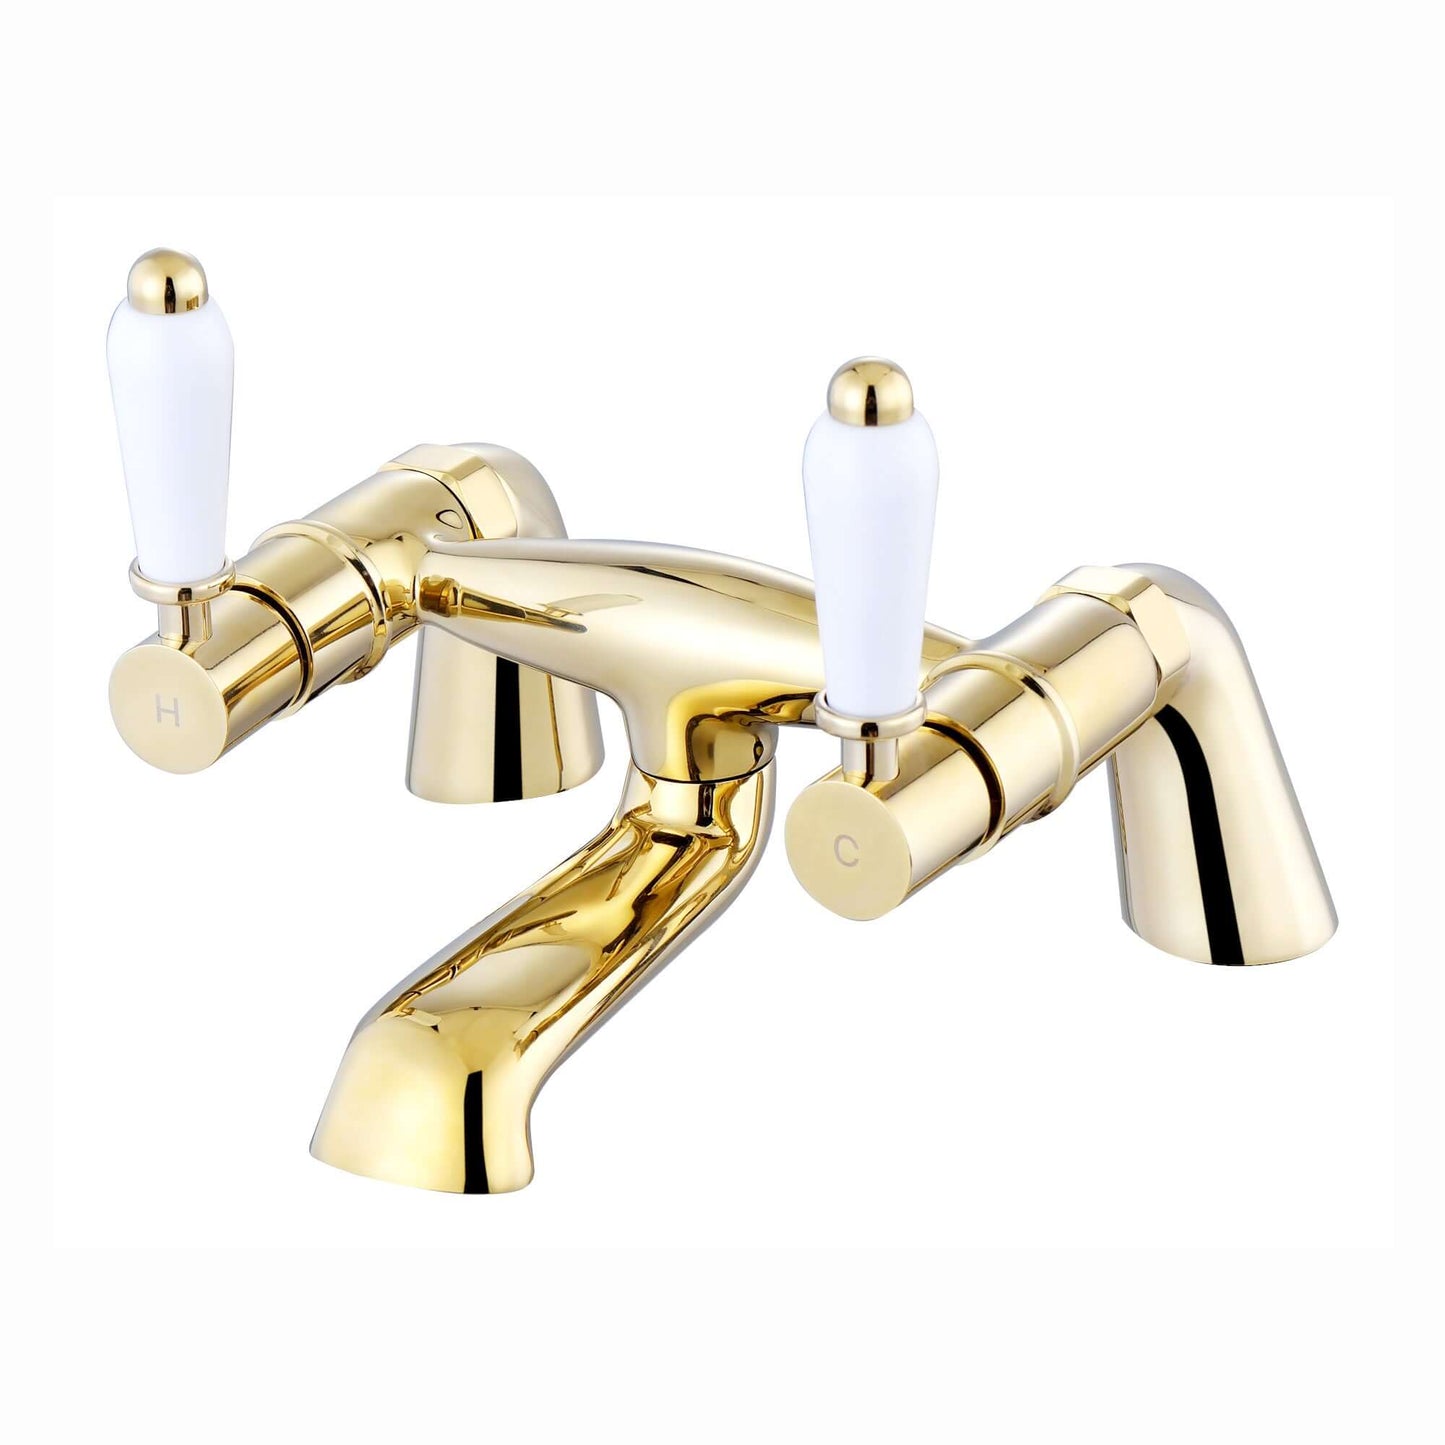 Downton bath mixer tap with white ceramic levers - English gold - Taps